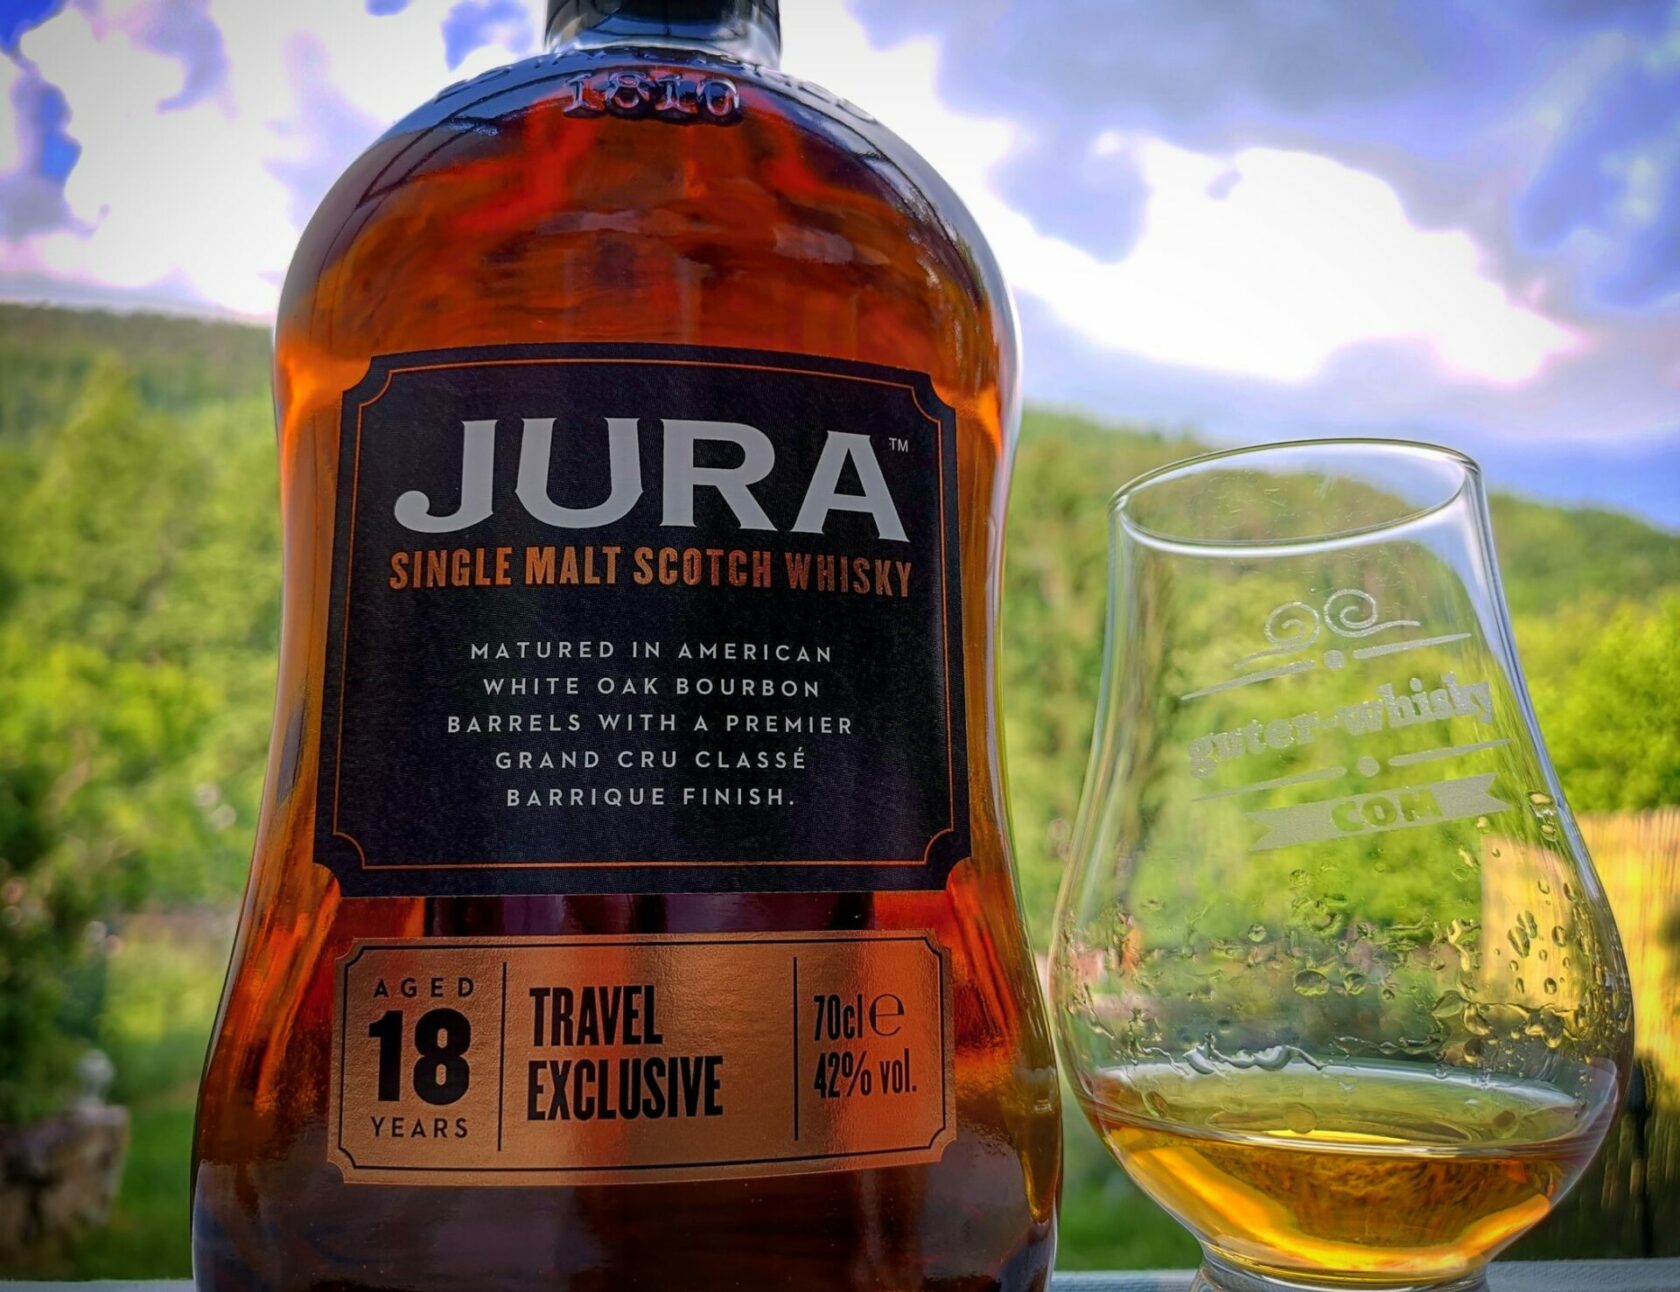 Jura 18 Jahre Travel Exclusive Islands Single Malt Scotch Whisky